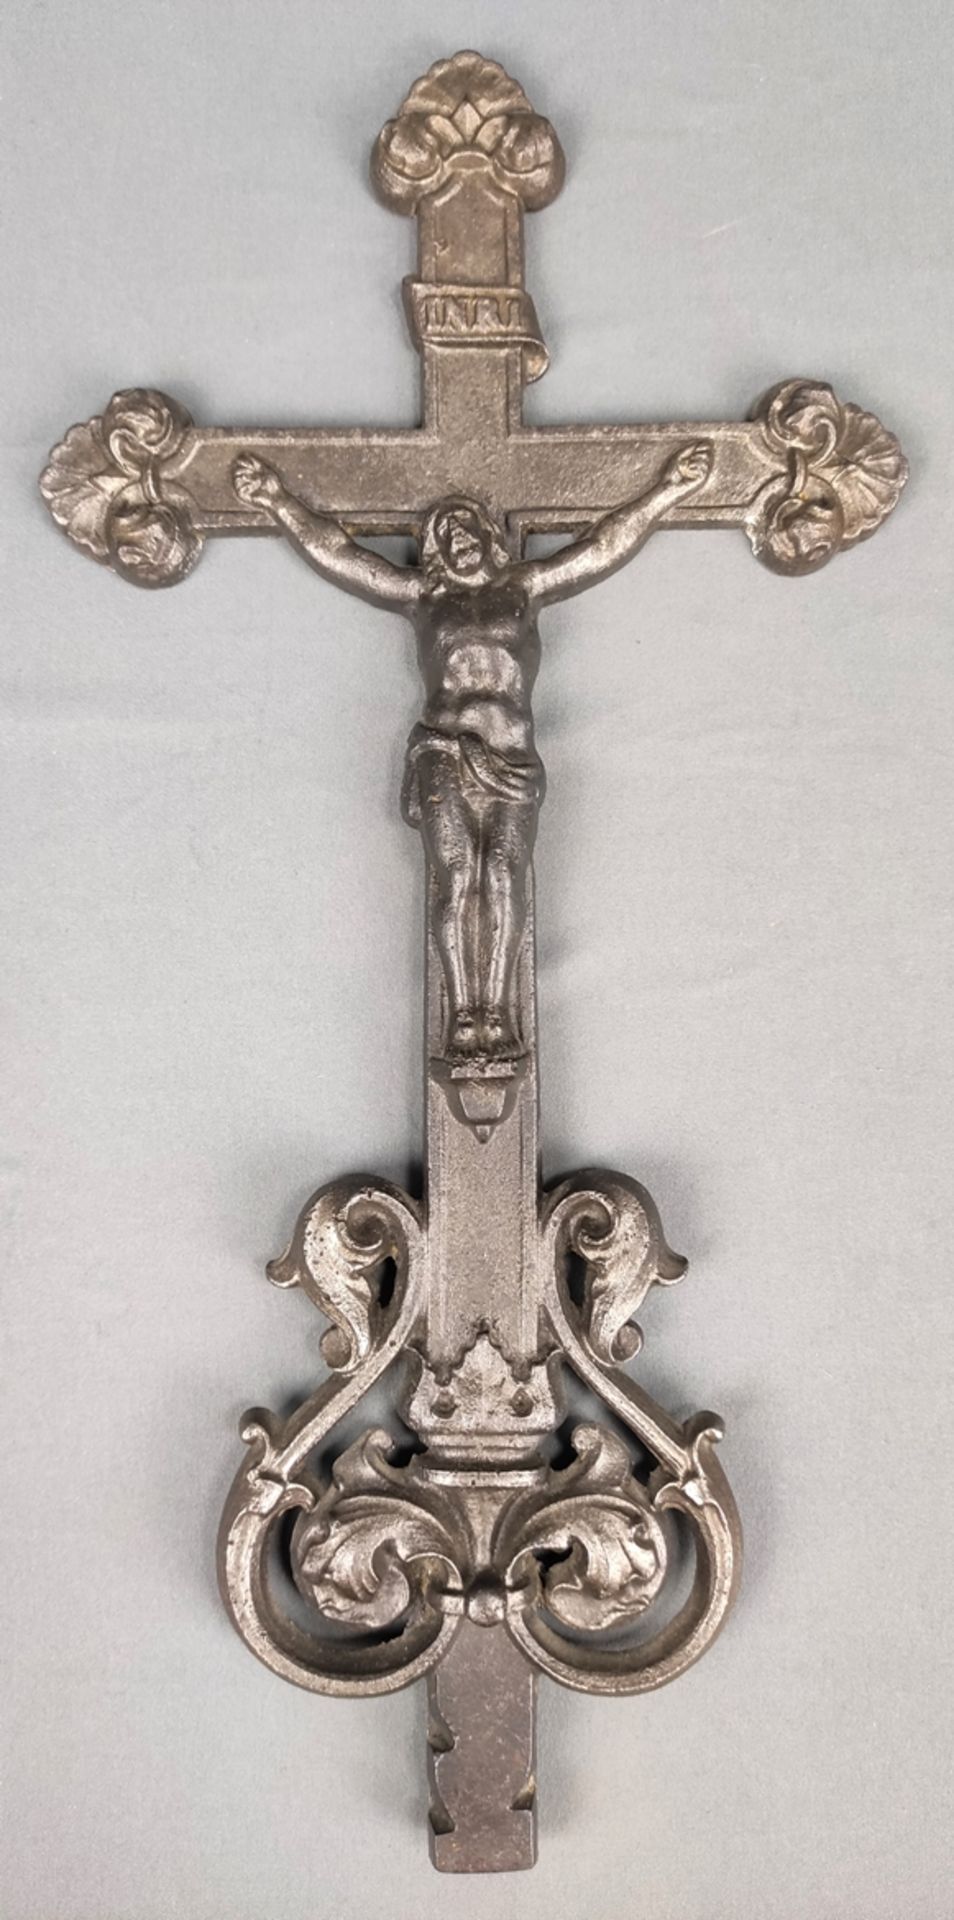 Grabkreuz im Barockstil, 20. Jahrhundert, Schwarzguss, reliefiert gearbeitet, Rocaillen Dekor, Corp